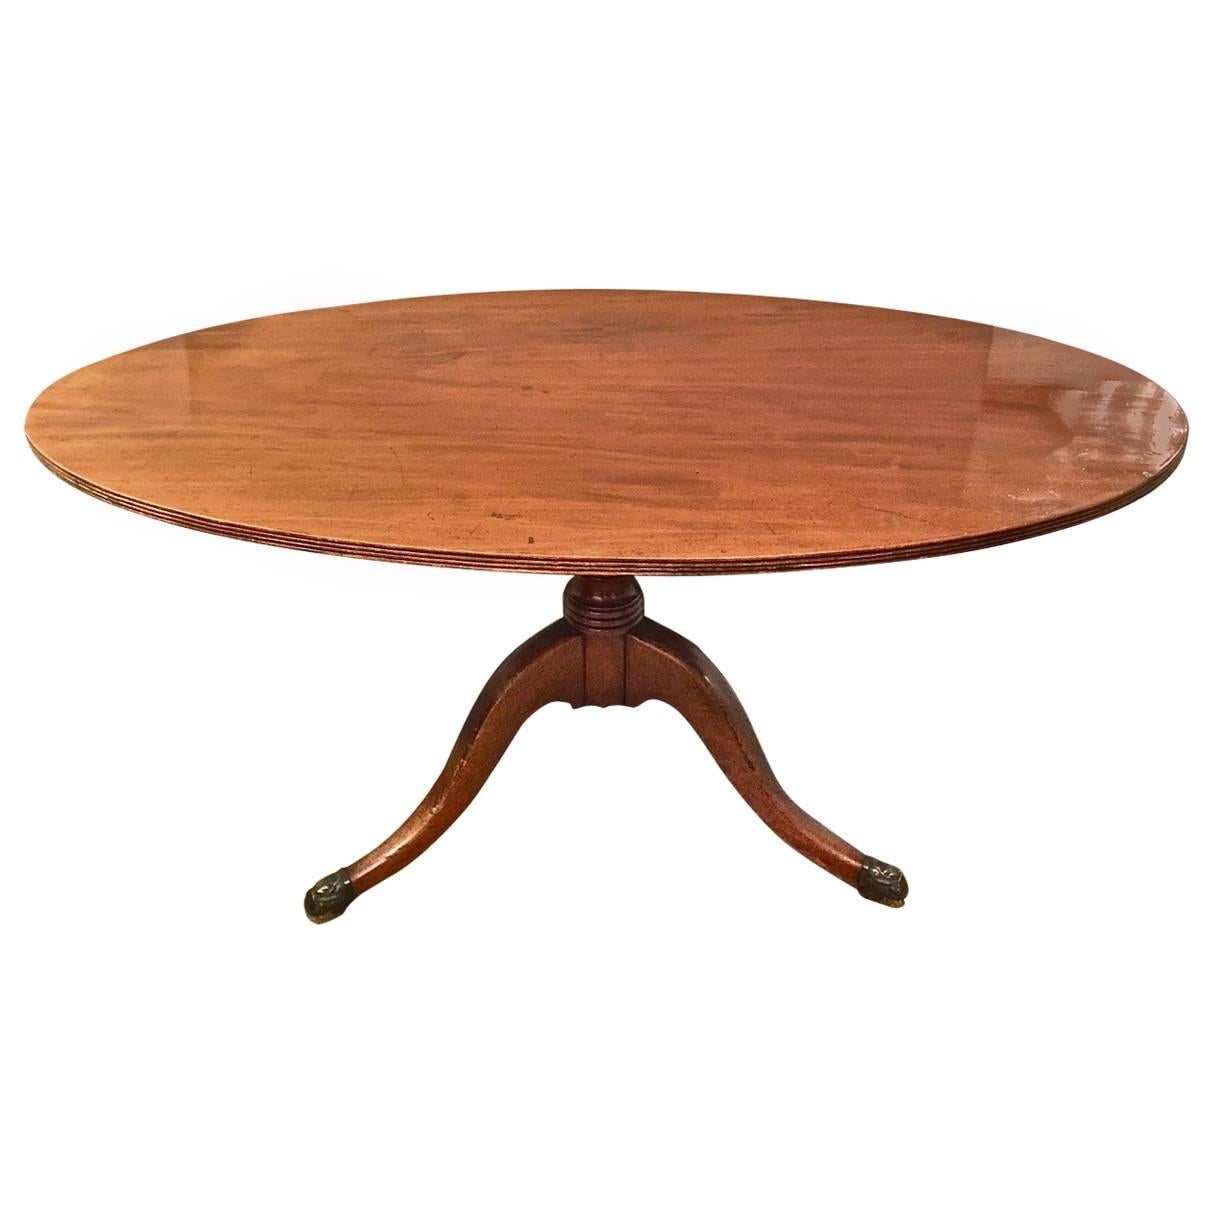 English Regency Mahogany Tilt-Top Breakfast Table, circa 1820-1830